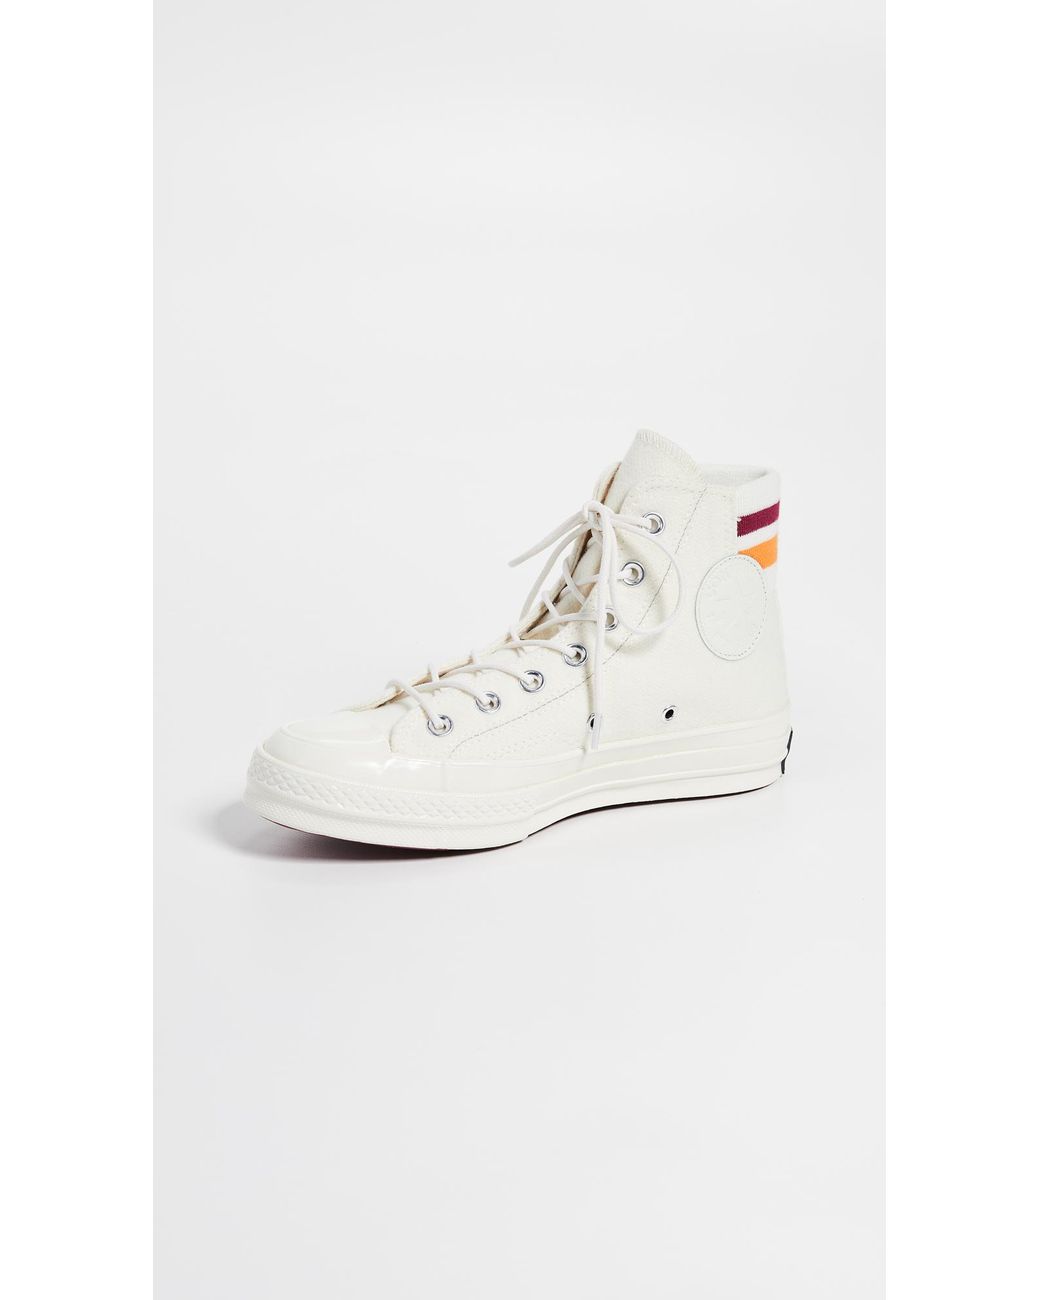 Converse Felt Chuck 70 Retro Stripe High Top Sneakers in White | Lyst